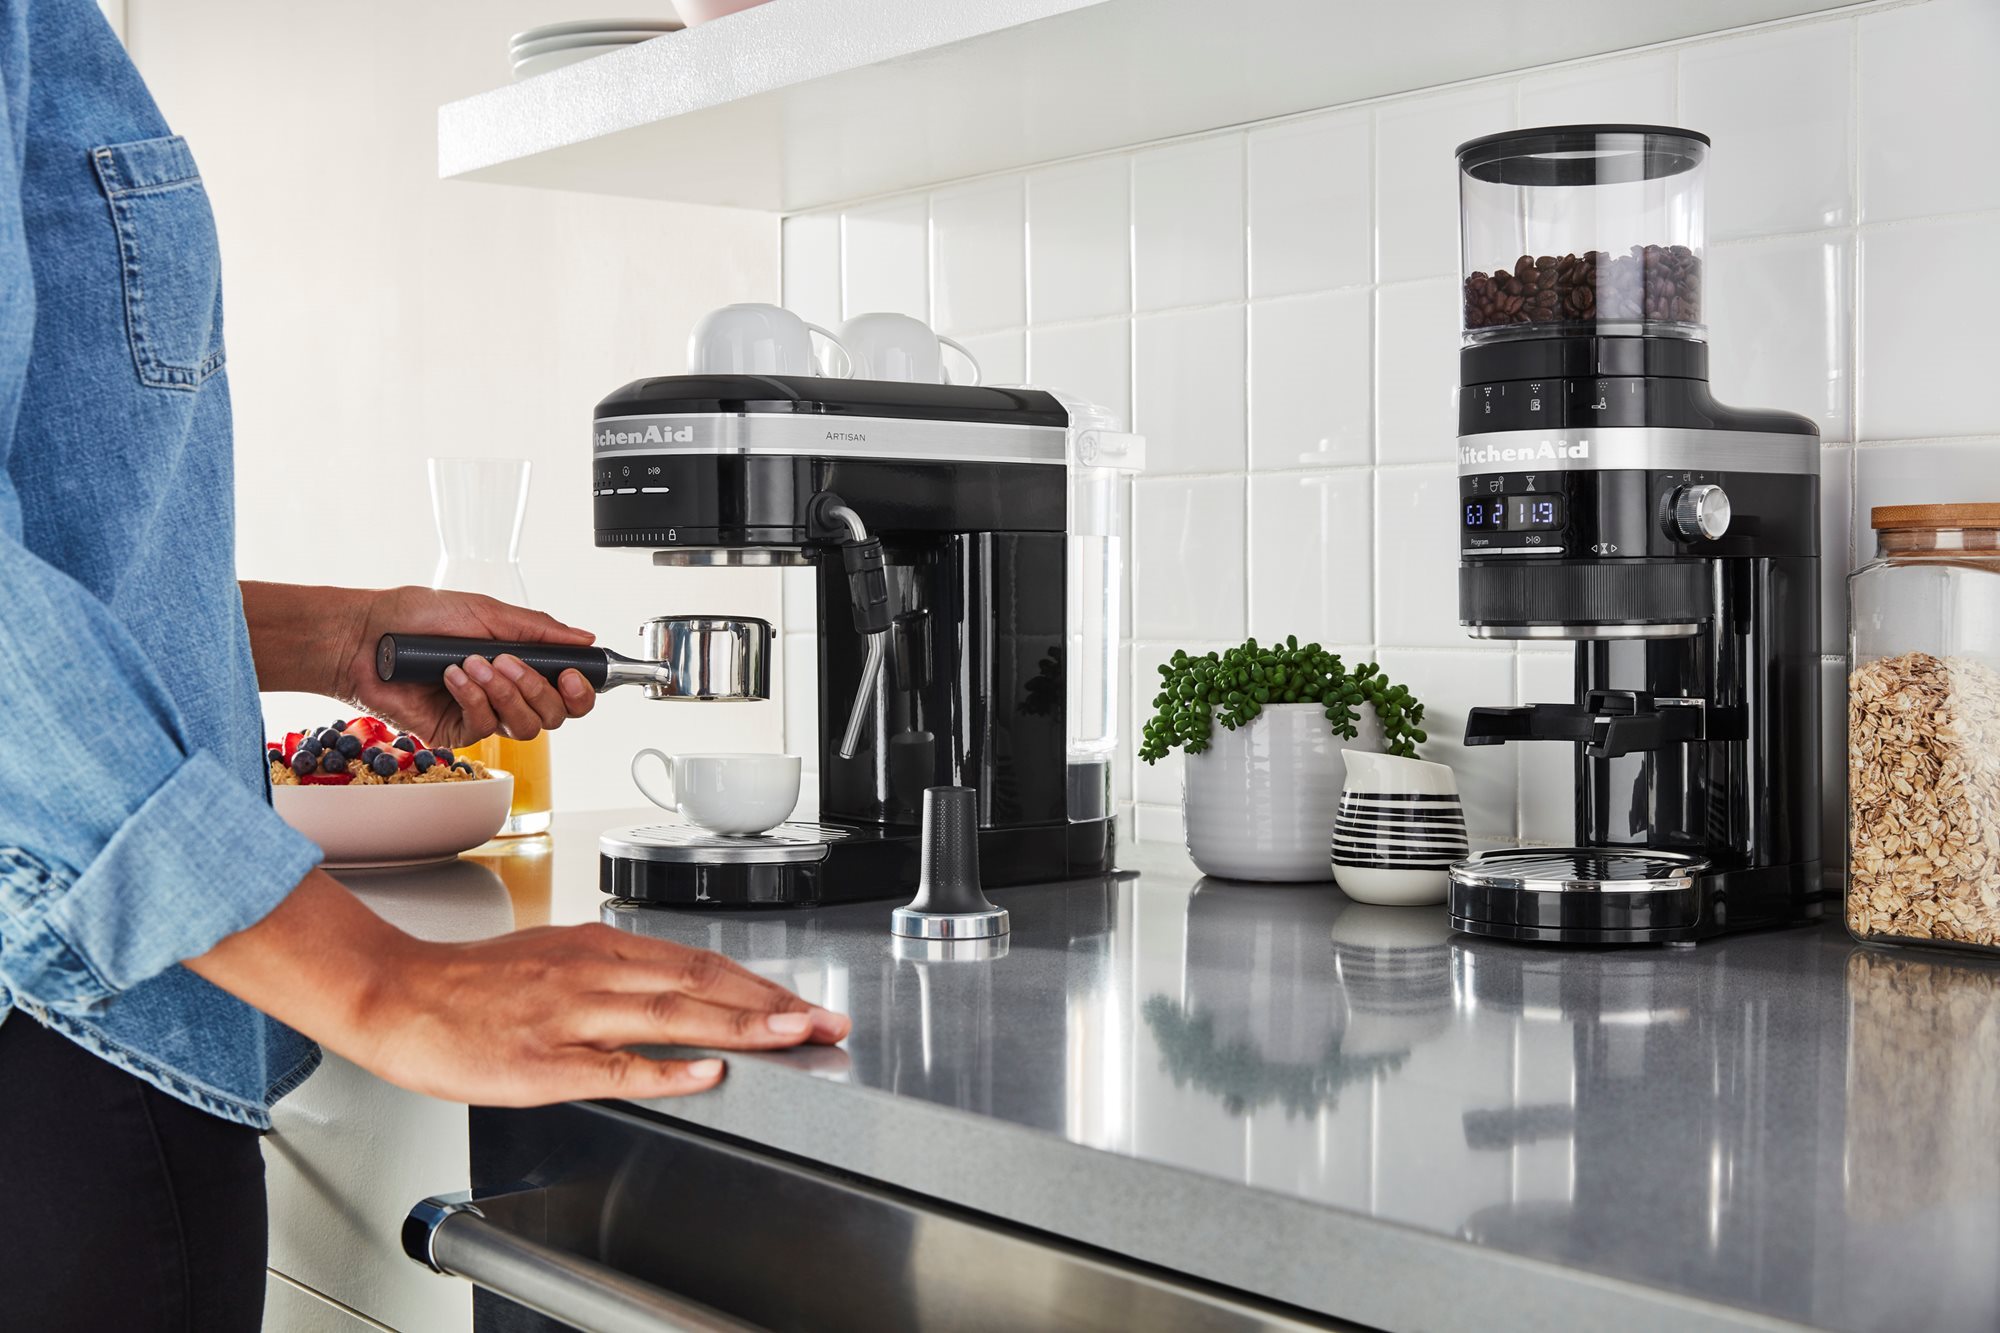 Artisan electric coffee grinder, Matte Black - KitchenAid